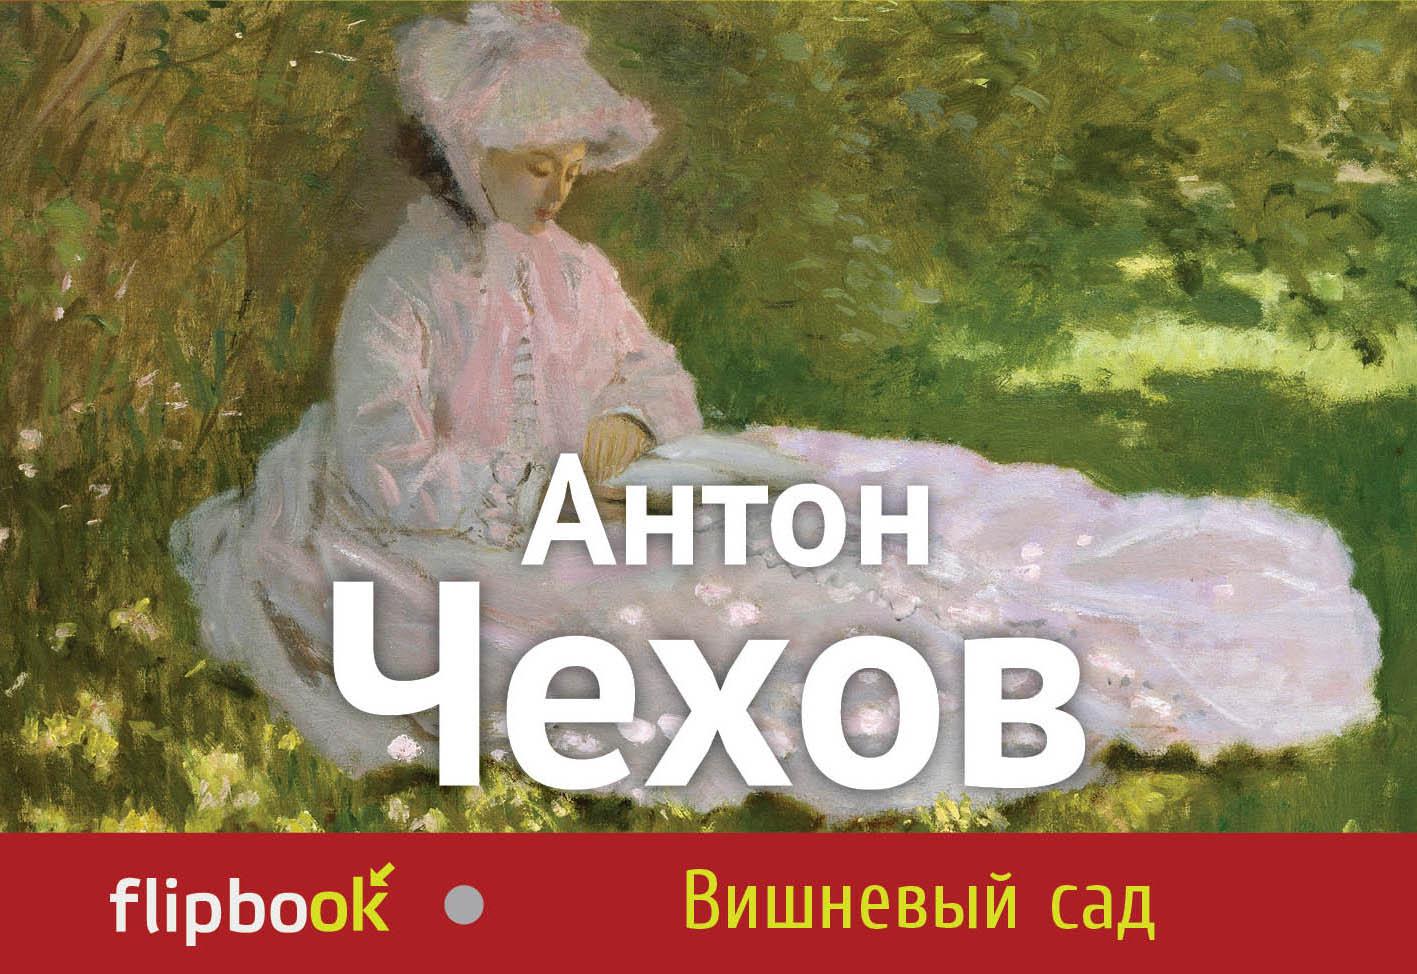 https://cdn.book24.ru/v2/ITD000000000308383/COVER/cover13d.jpg